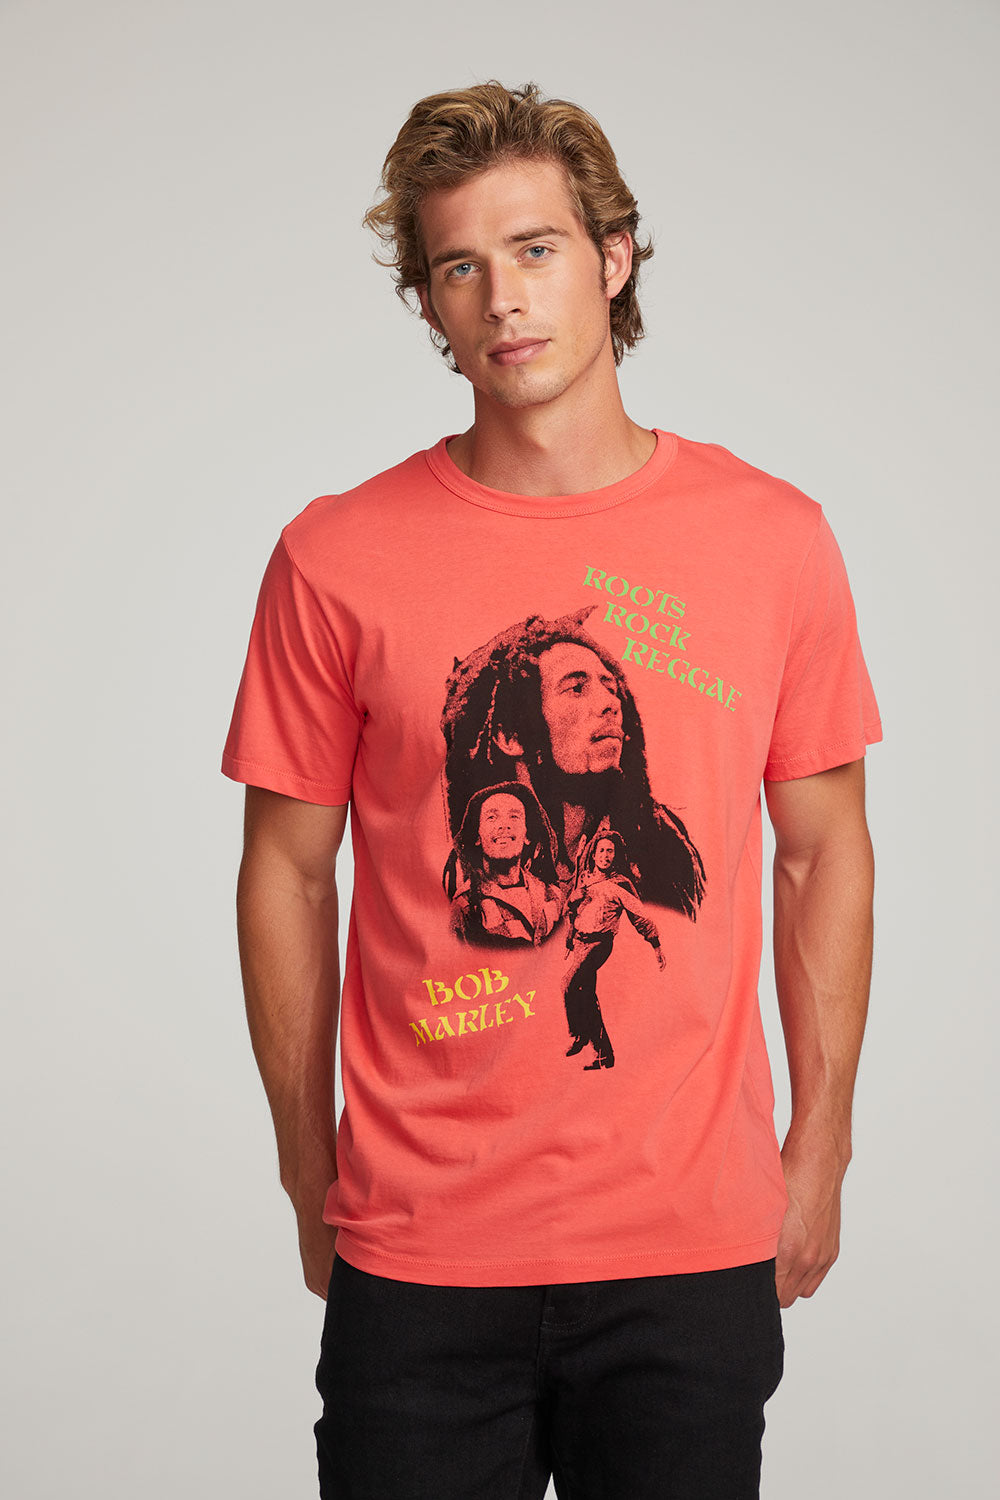 Bob Marley Roots Rock Reggae Mens Tee MENS chaserbrand